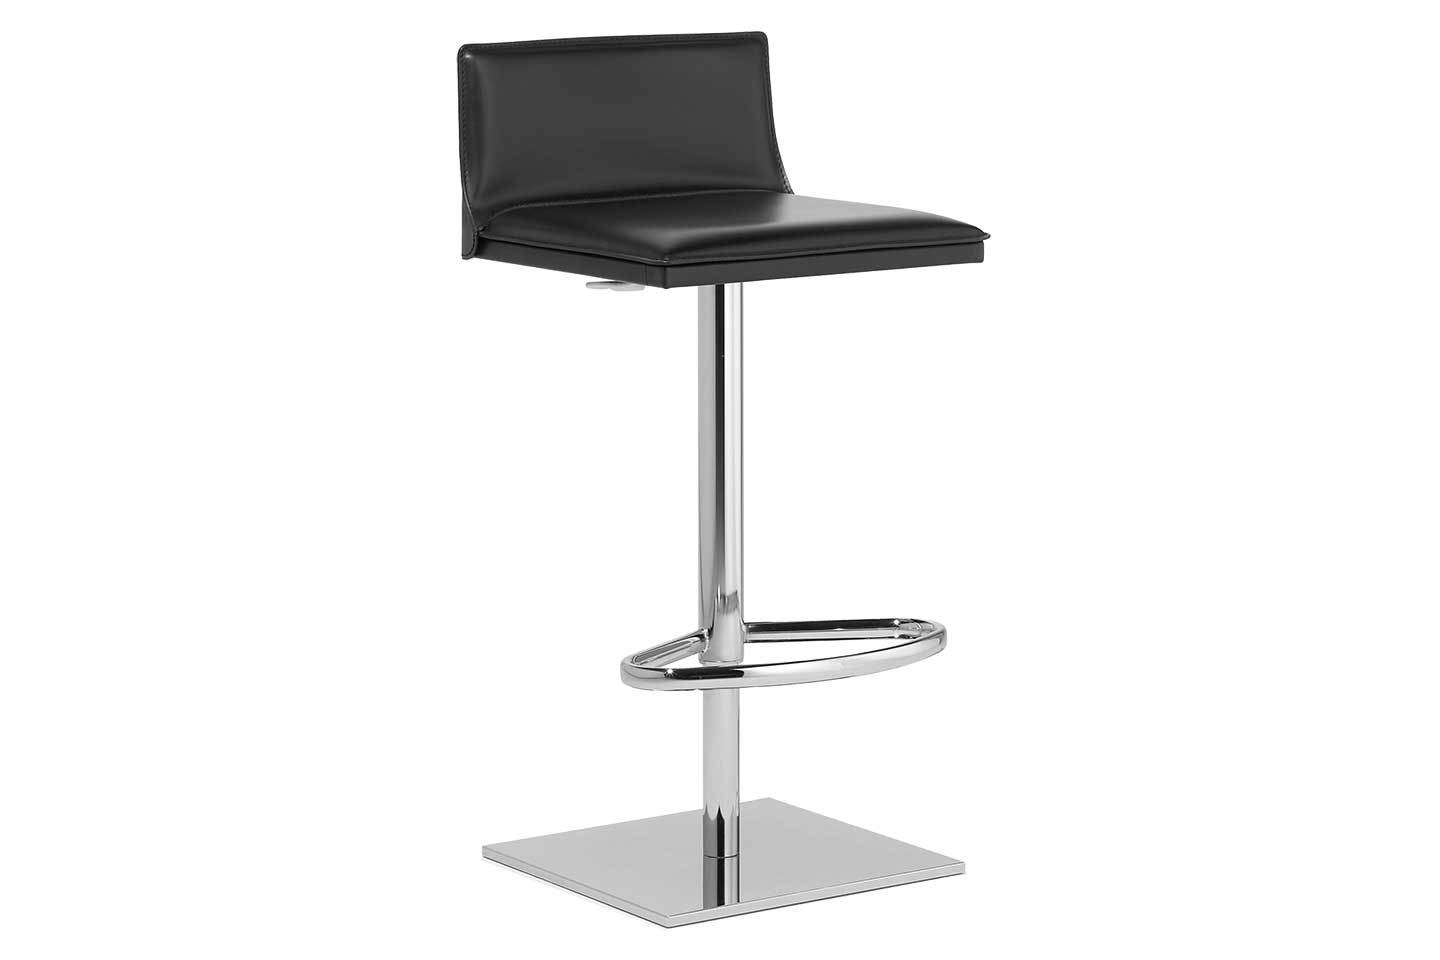 Mobili Italia_Frag LATINA GP counter stool